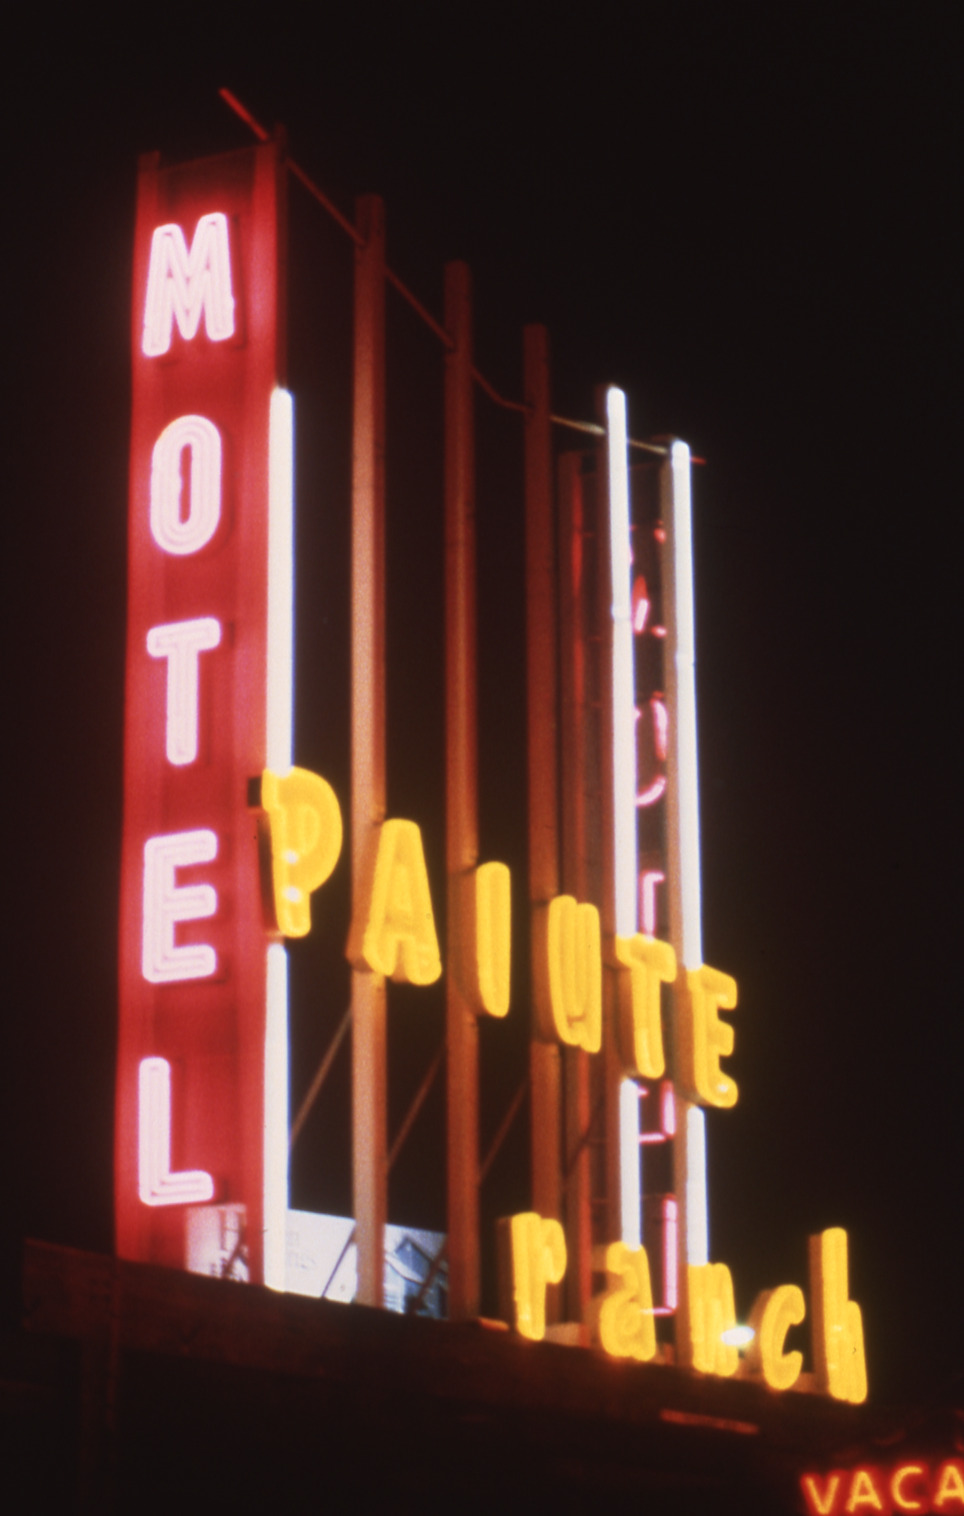 Paiute Ranch Motel roof and wall mounted signs, Reno, Nevada: photographic print